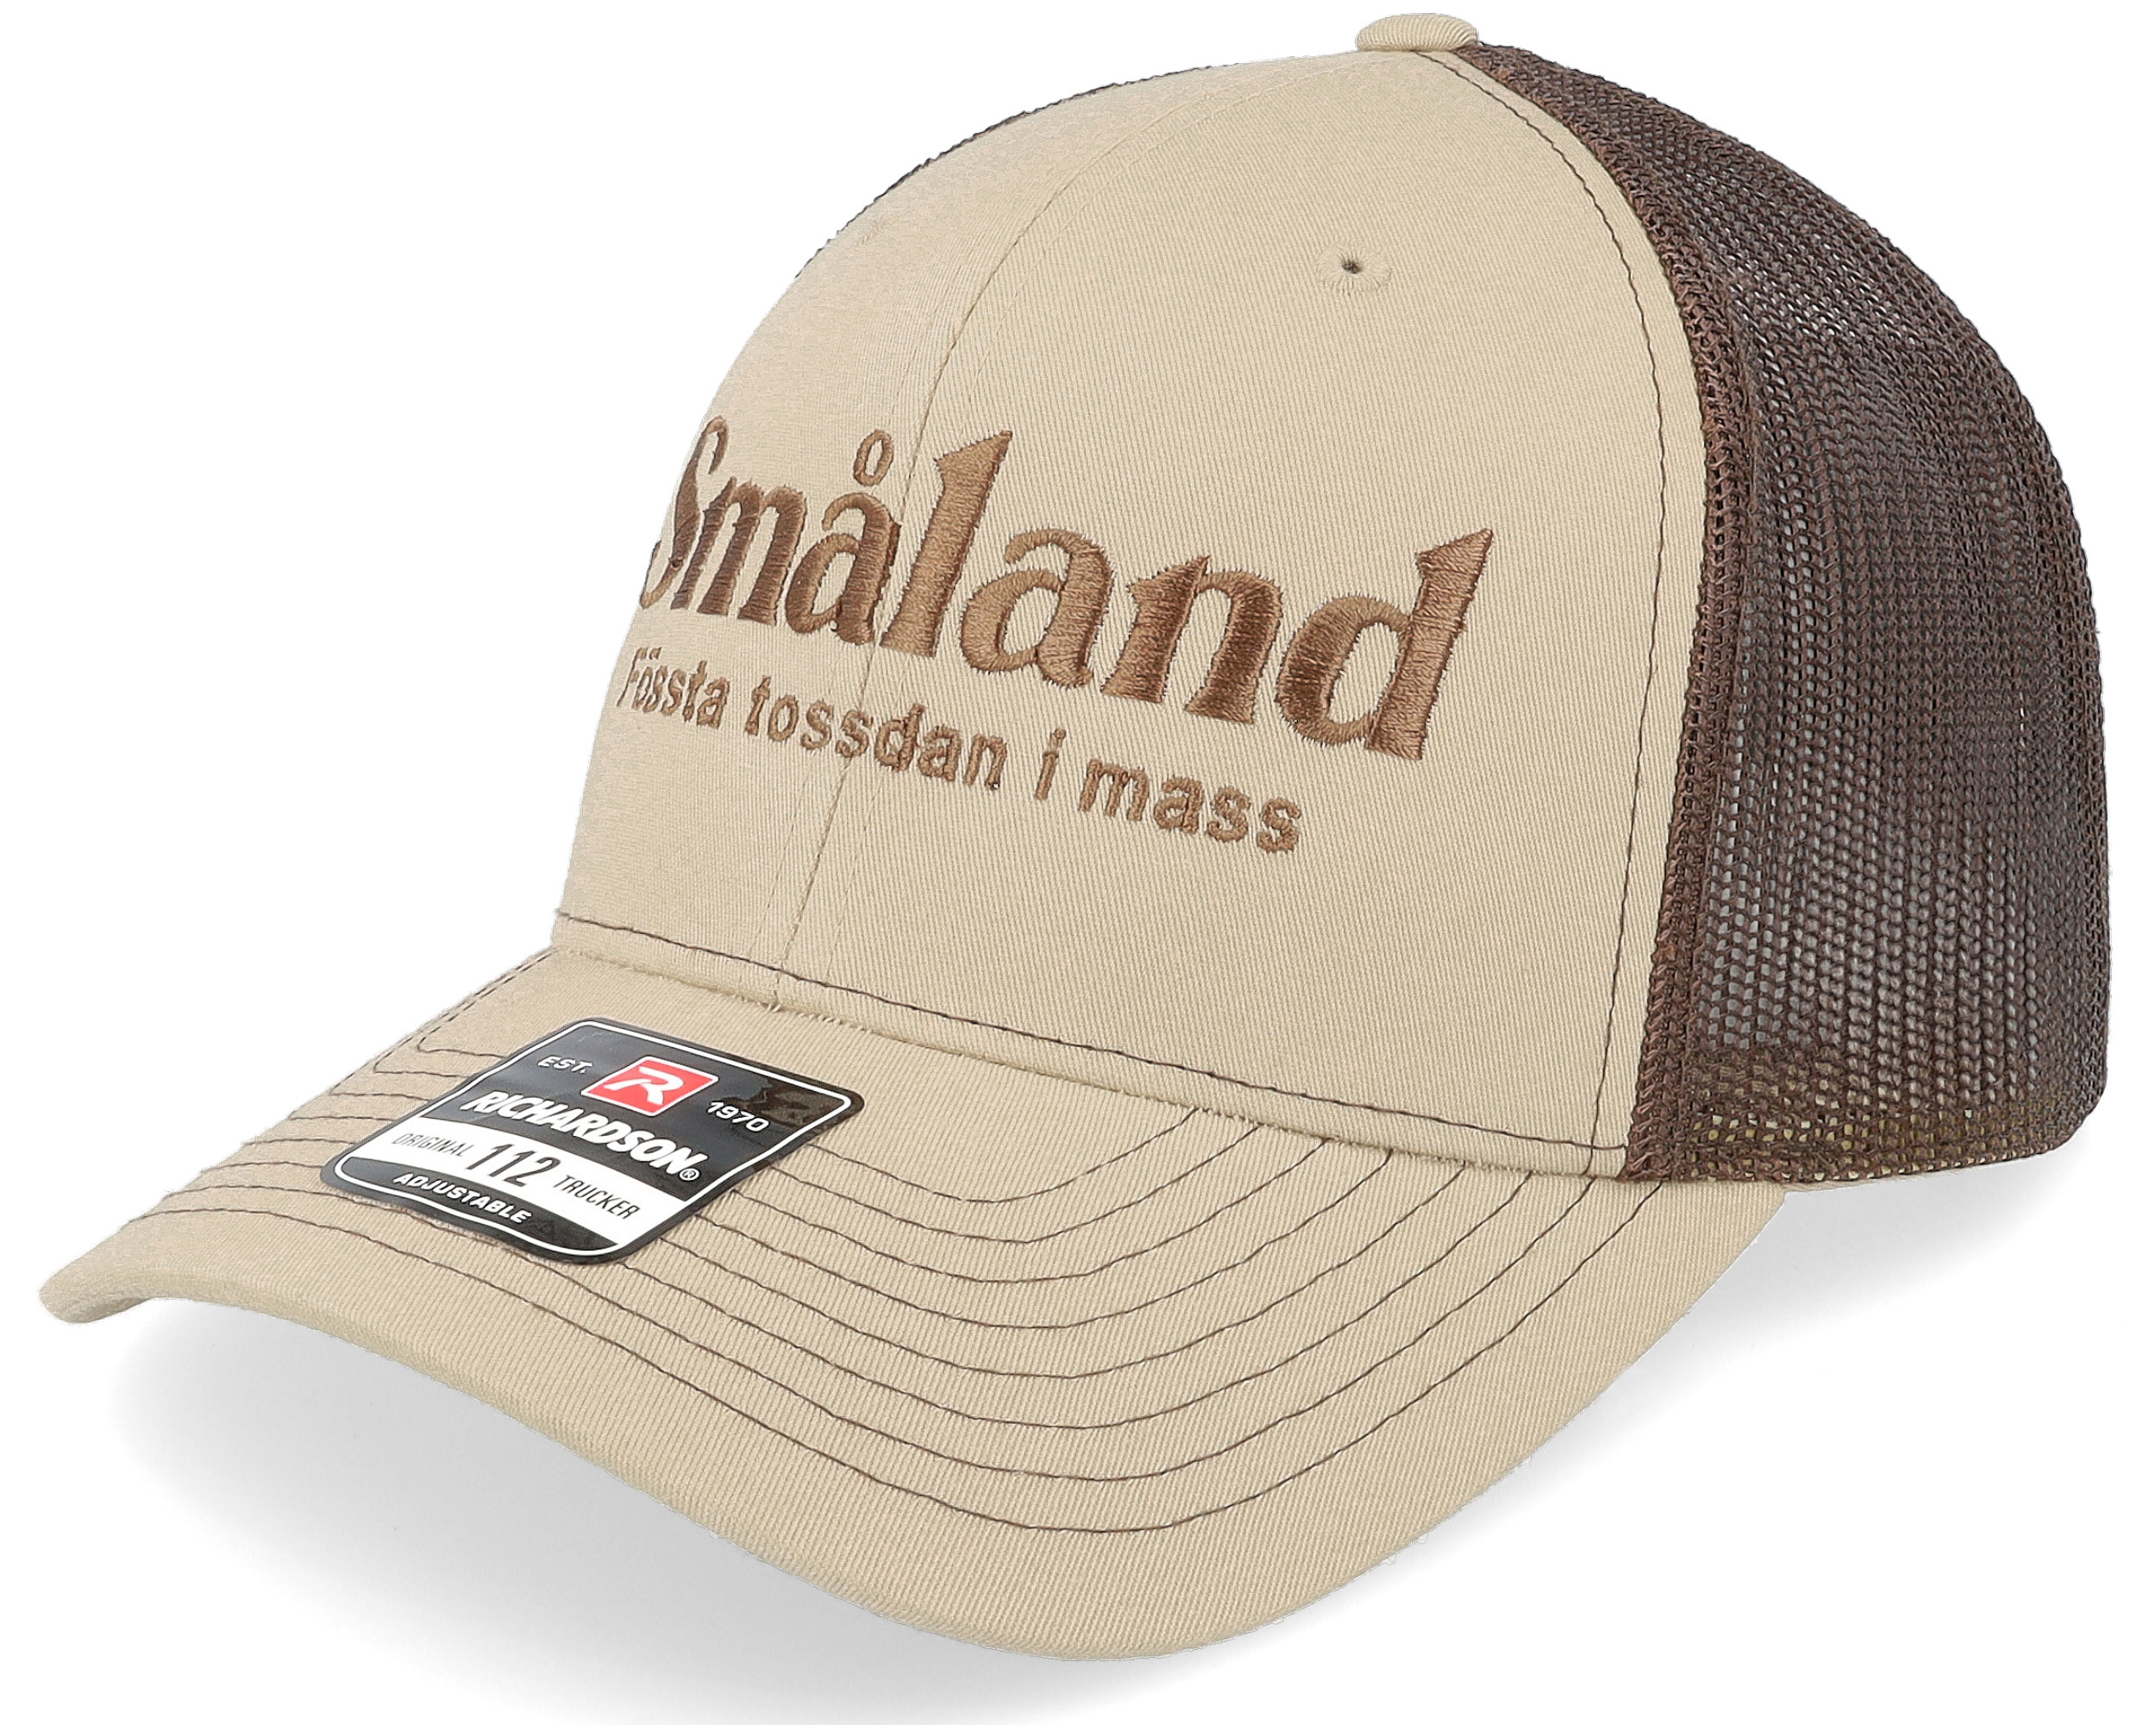 Småland Första Tossdan I Mass Khaki/Brown Trucker - Iconic caps